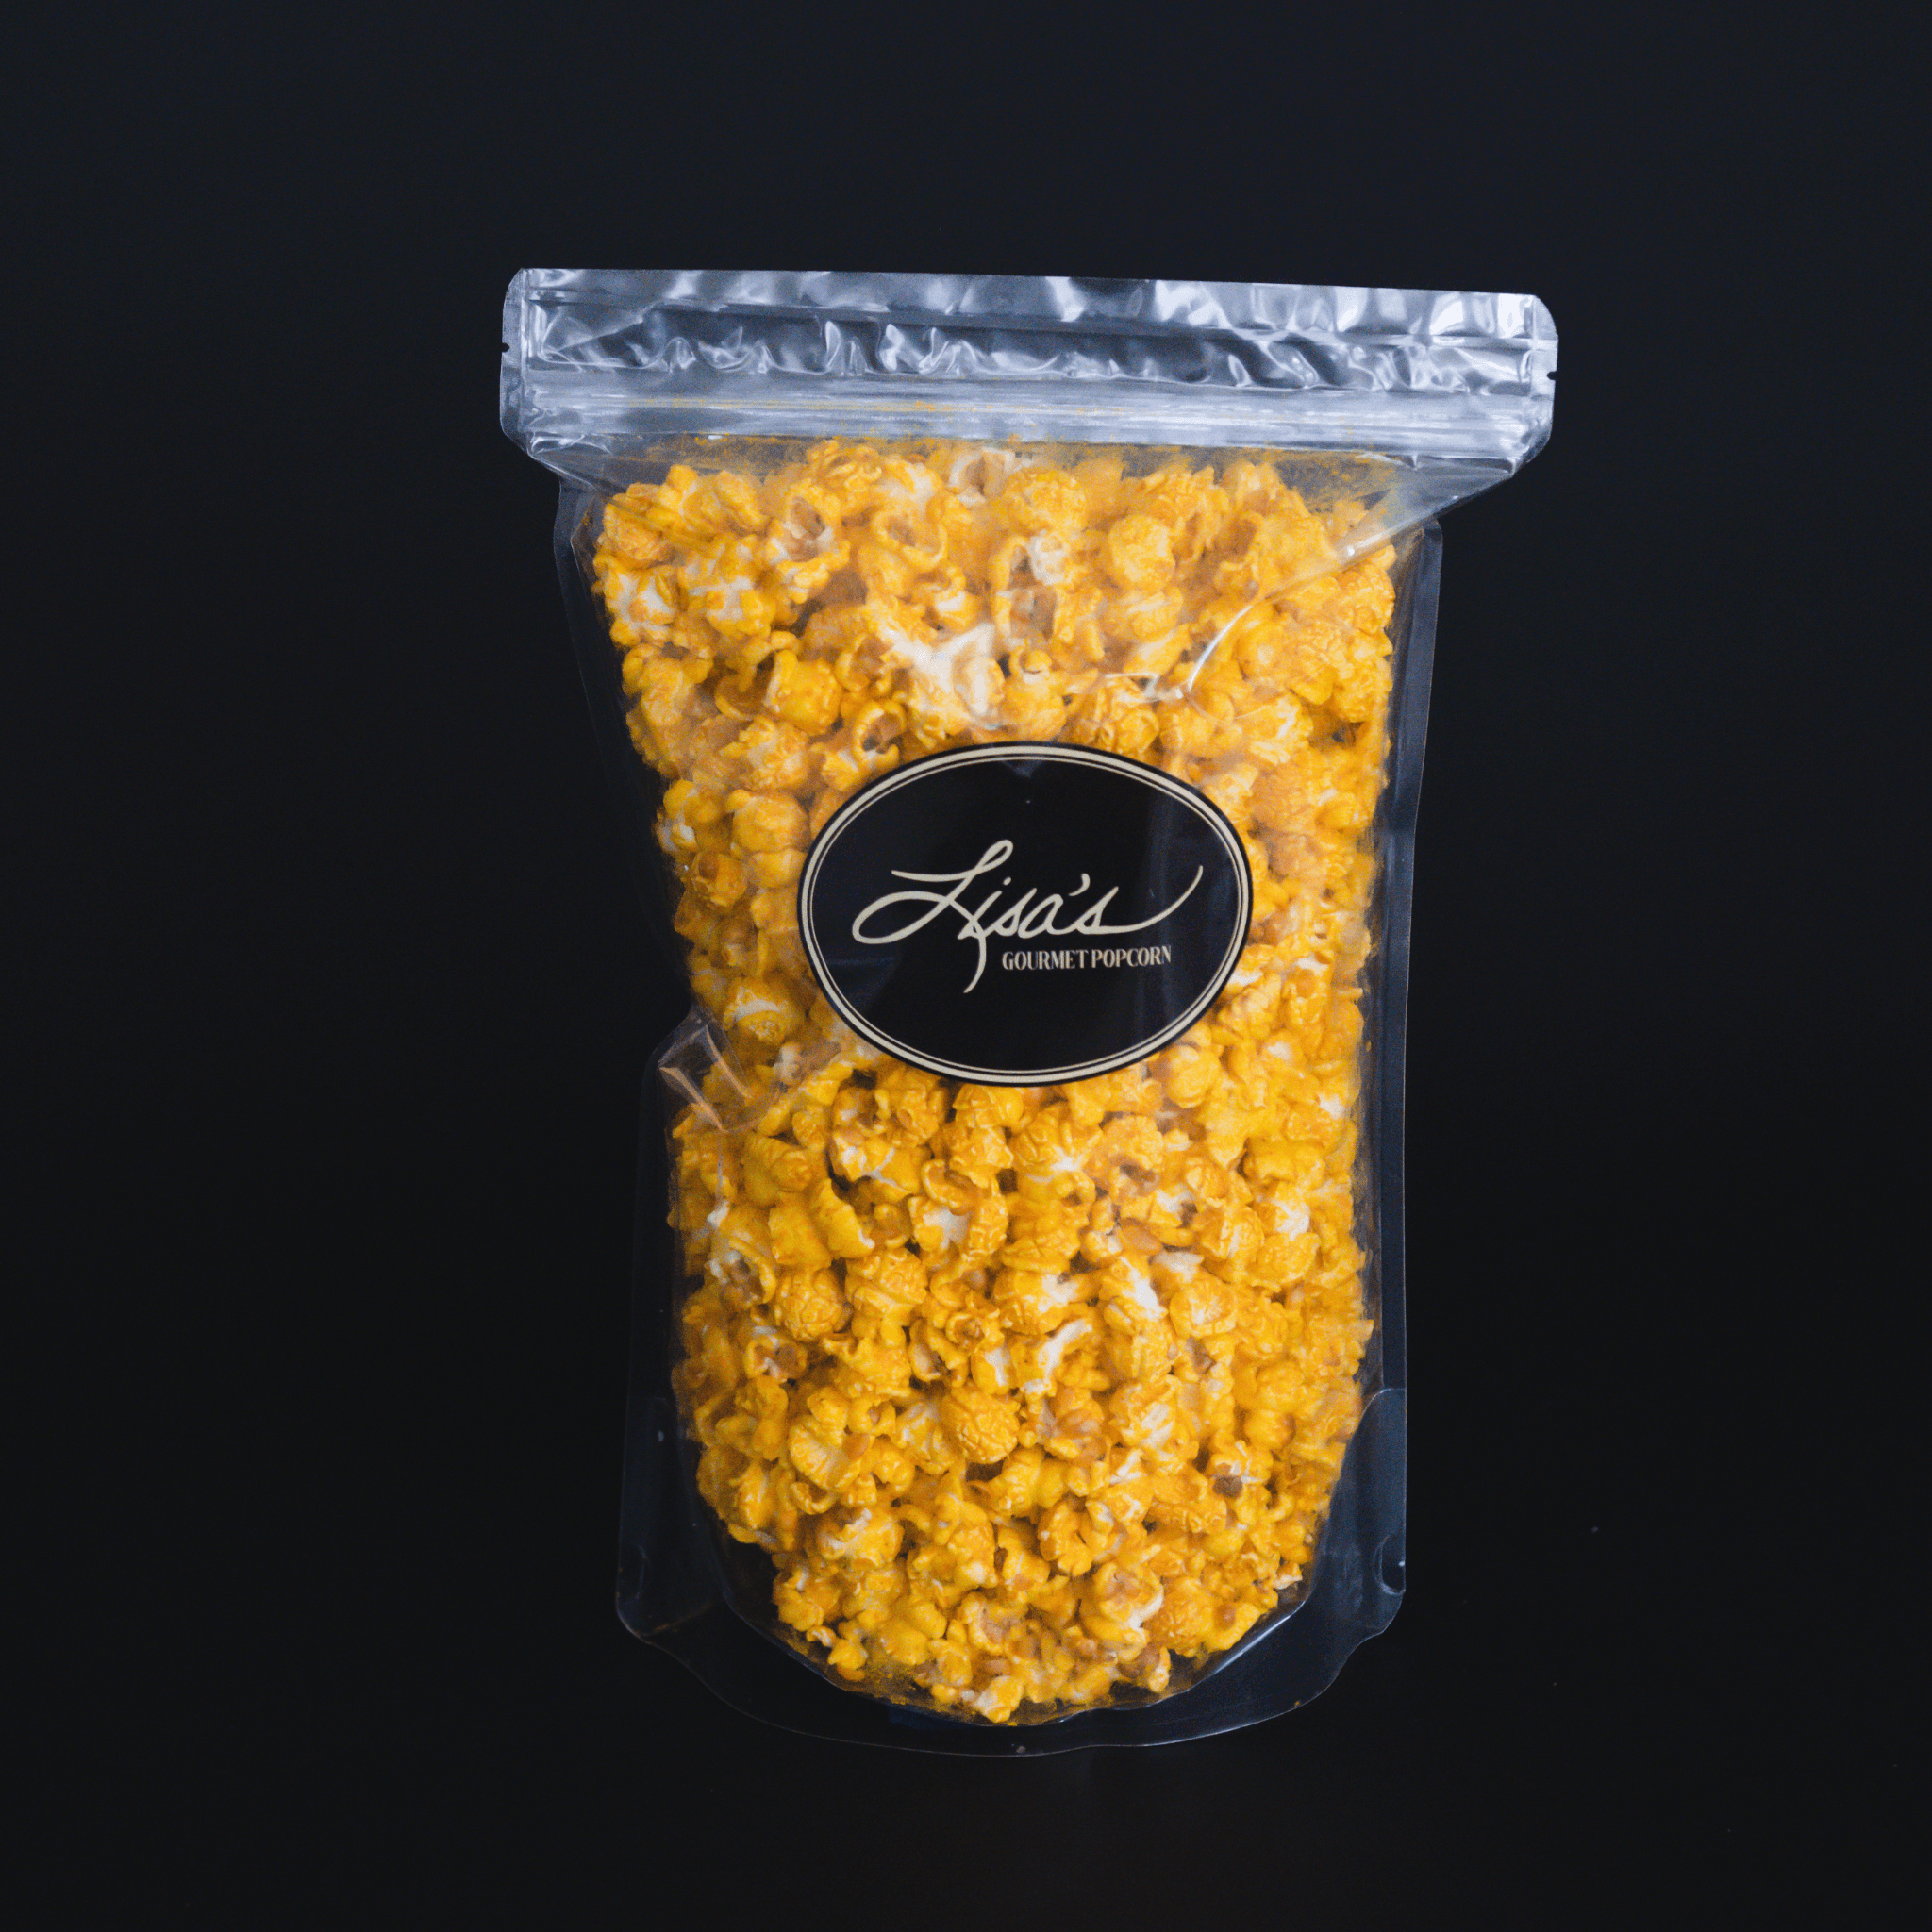 Jalapeño Cheddar Popcorn